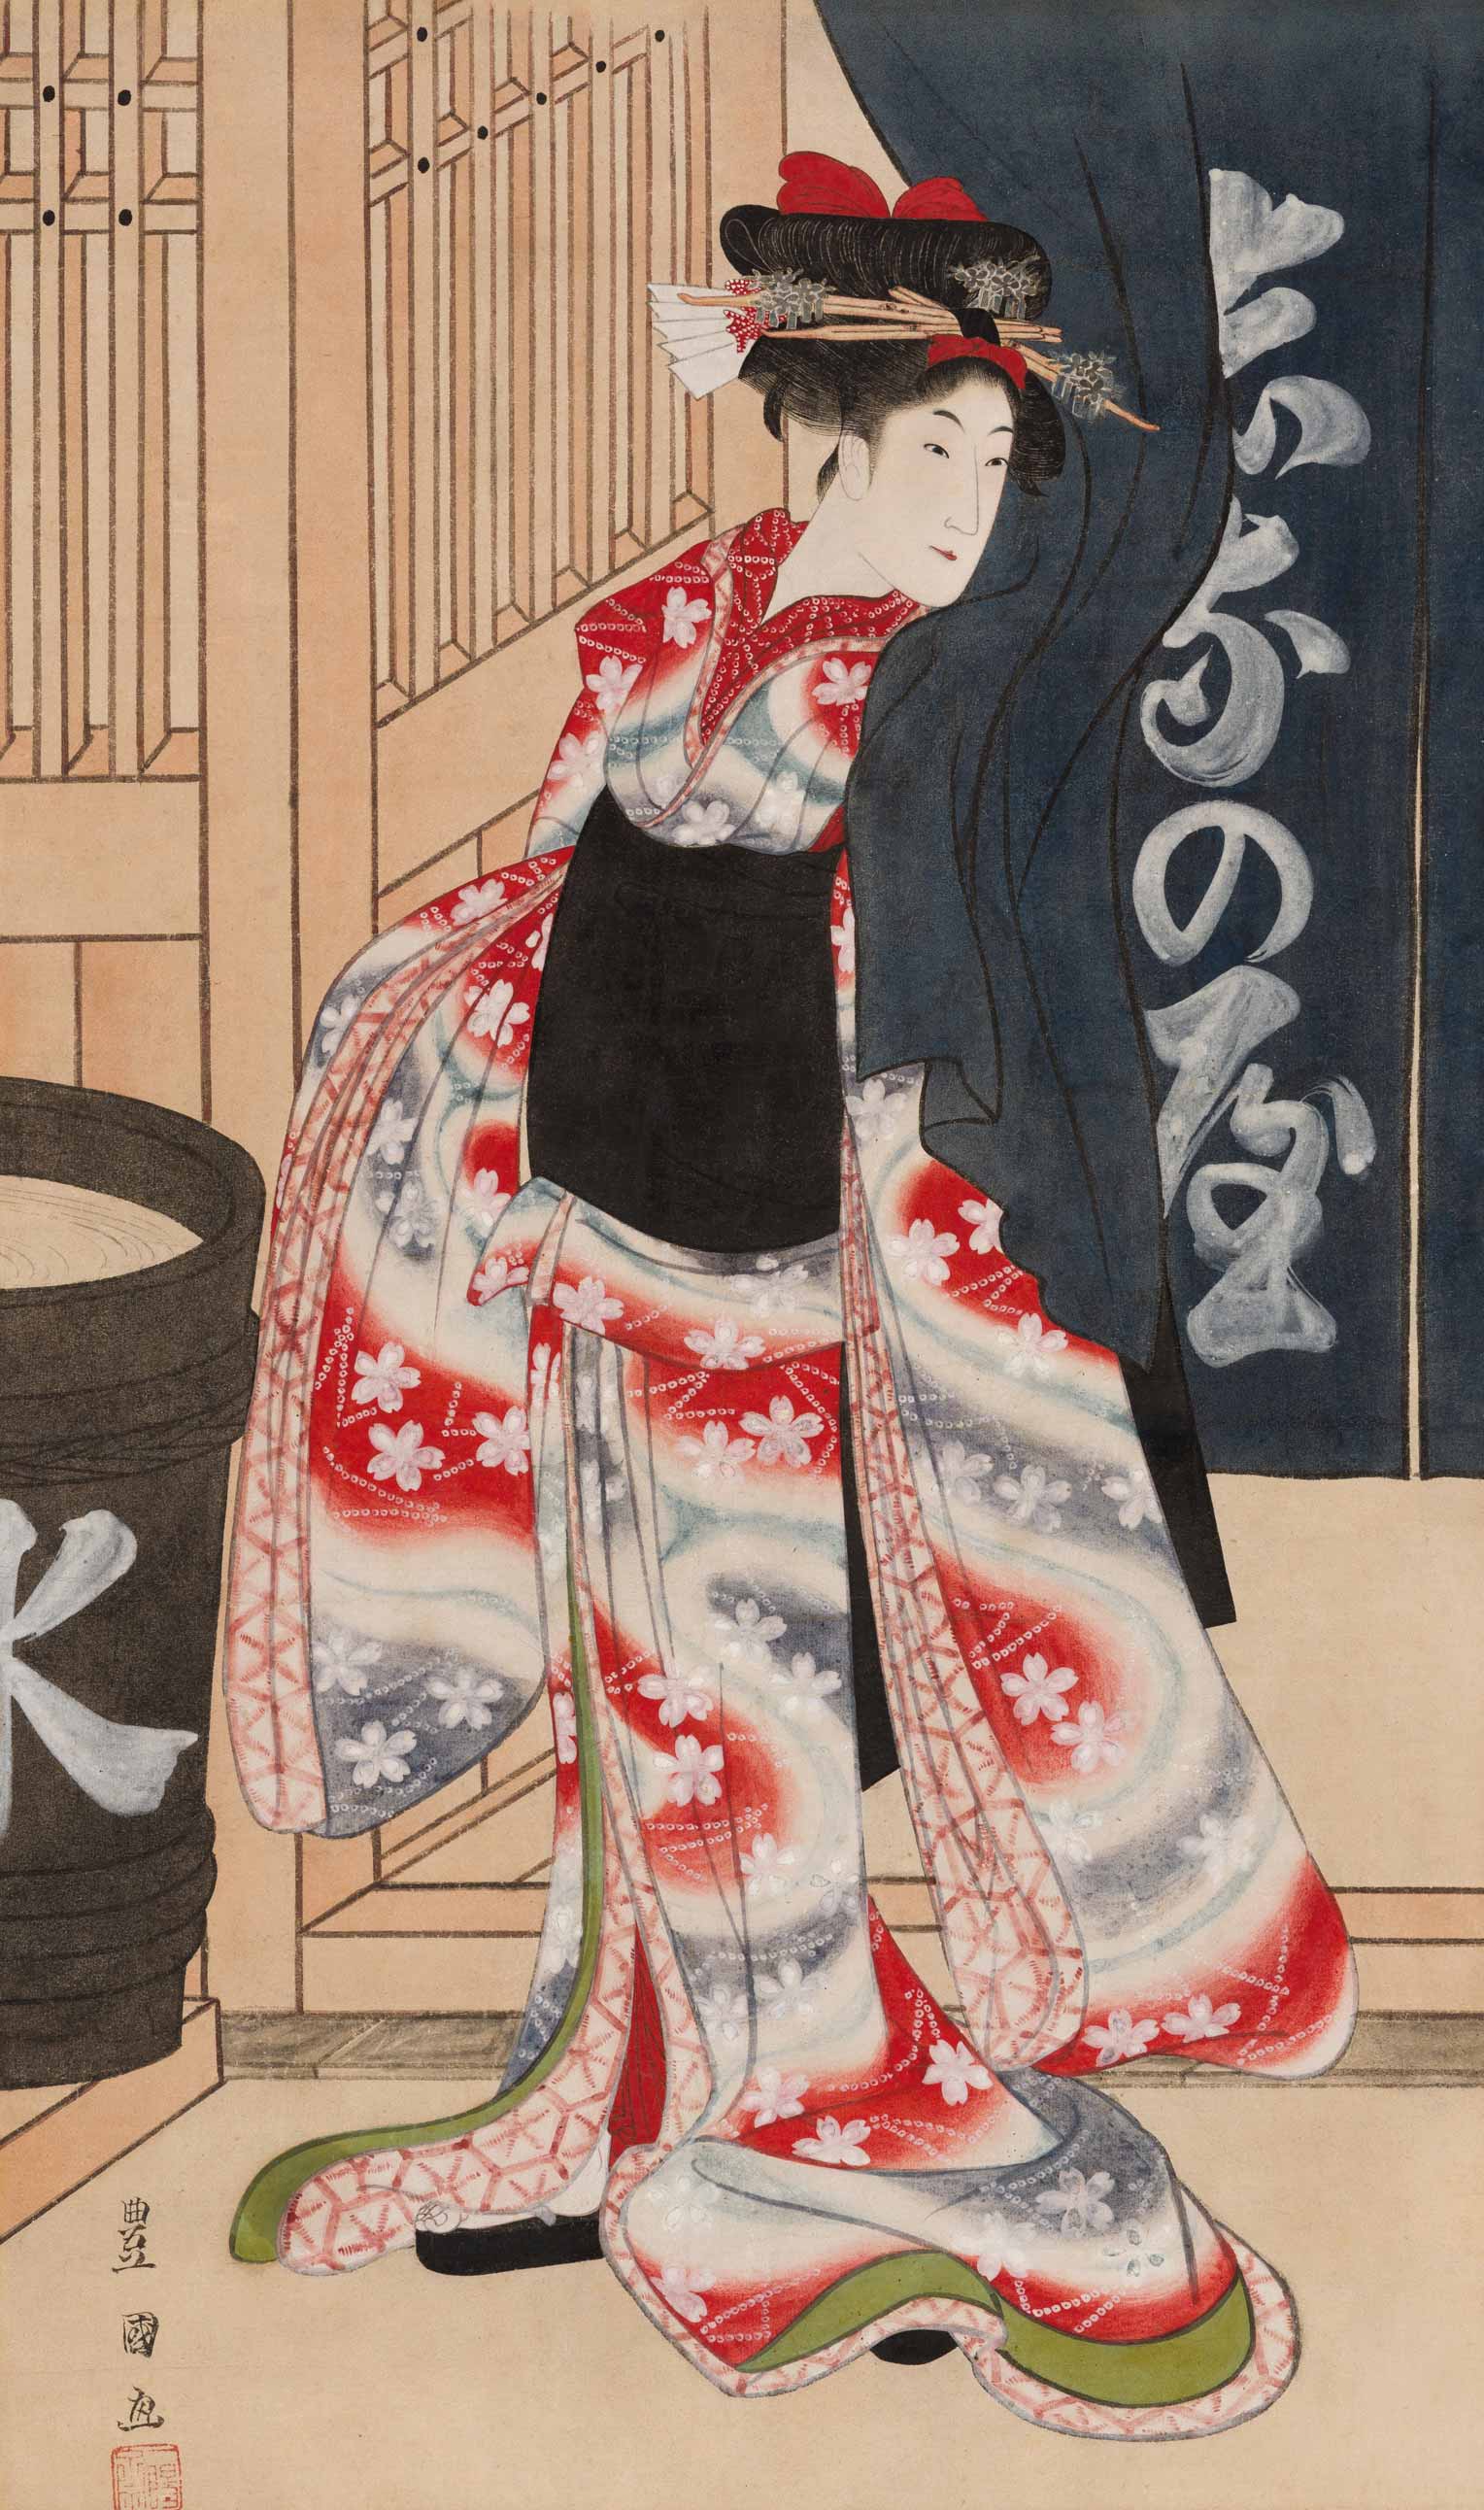 <p><strong>Utagawa Toyokuni</strong>, <em>Iwai Hanshirō V</em>, circa 1810, Private Collection.</p>
